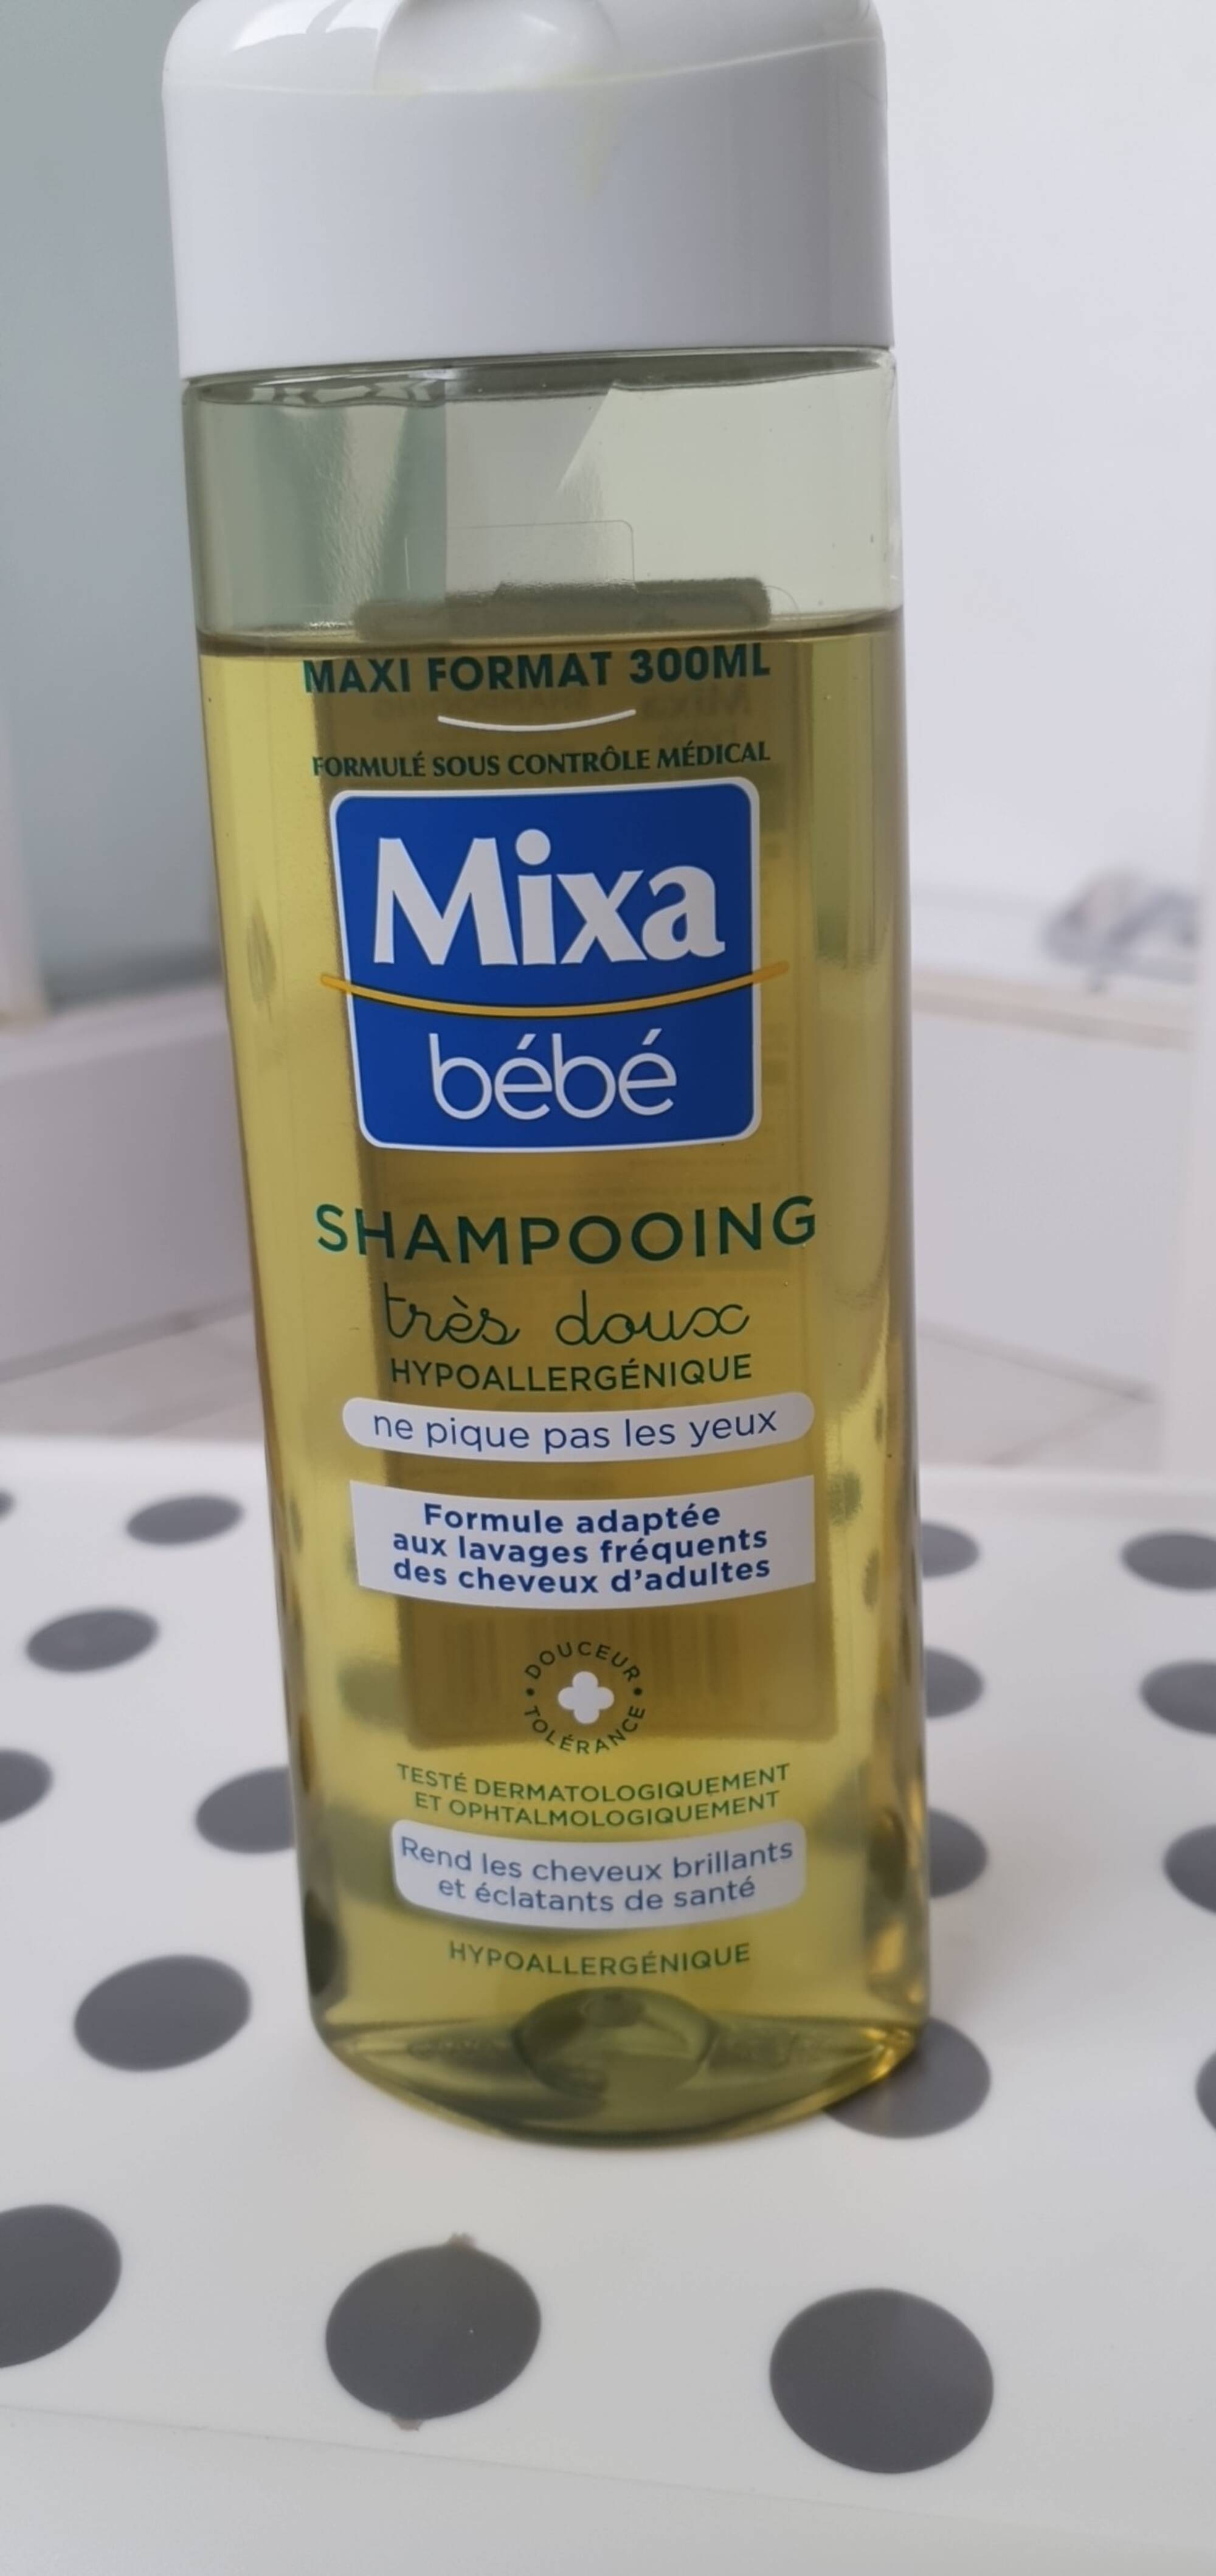 Composition MIXA BÉBÉ Mixa bio - Shampooing cheveux fragiles - UFC